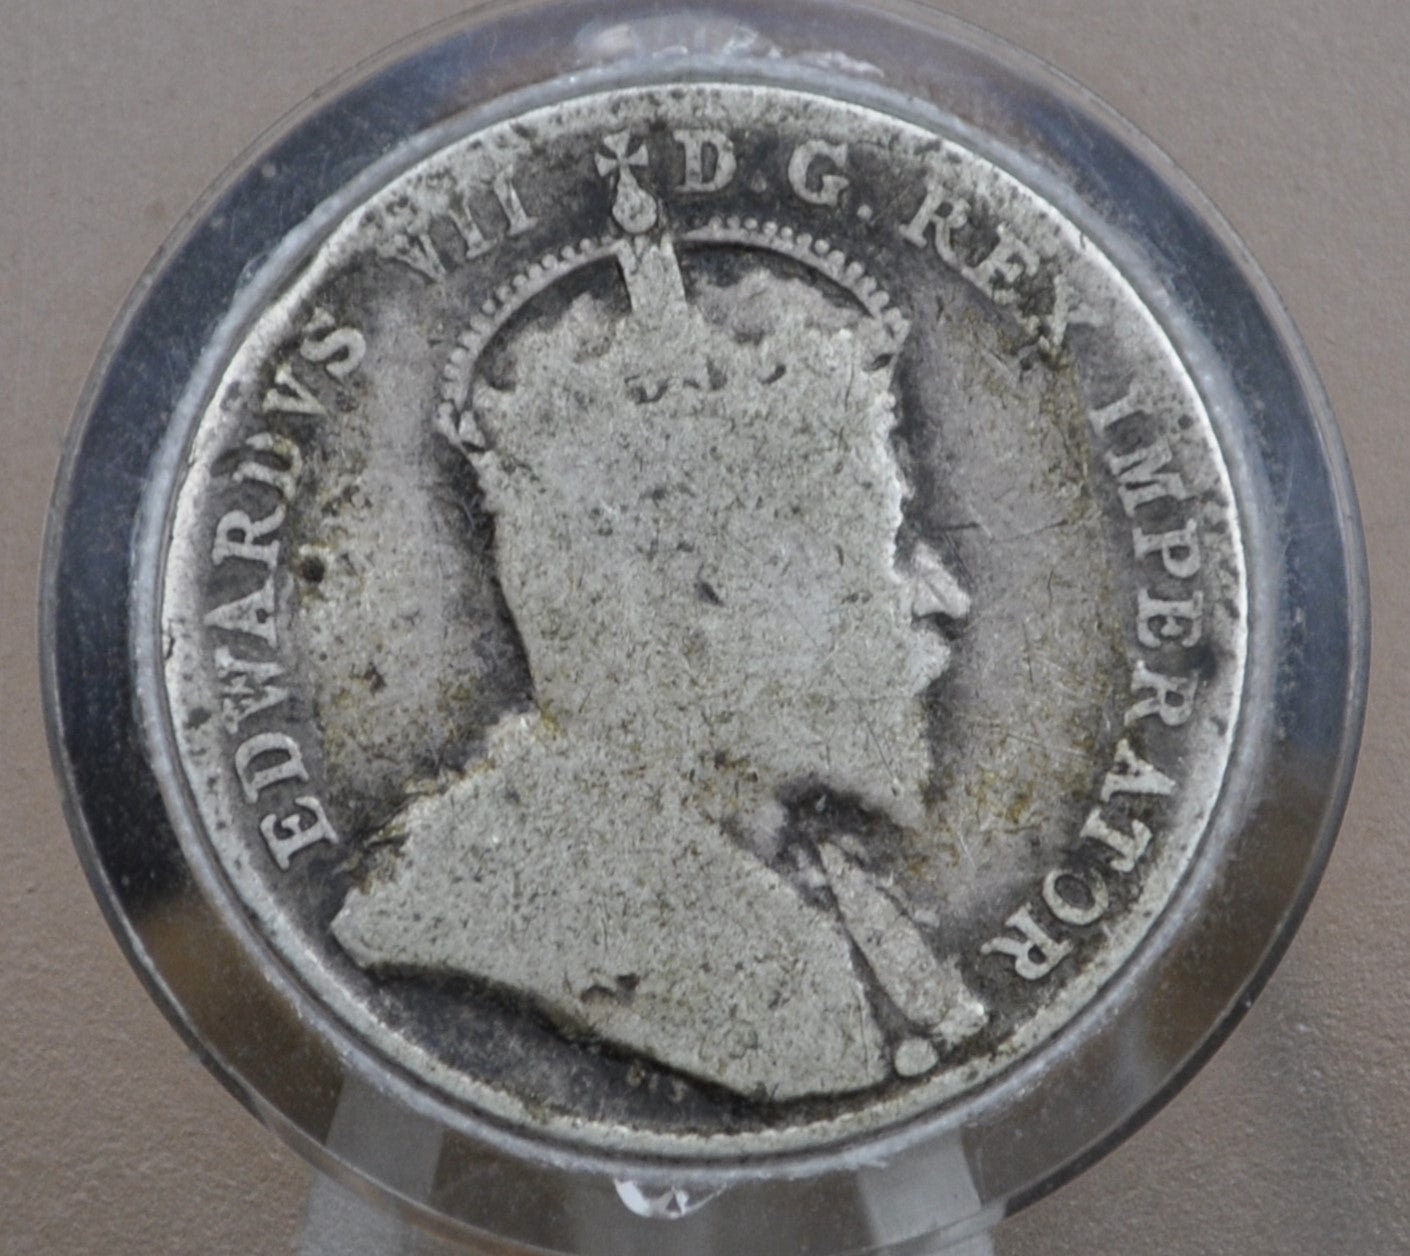 1908 Canadian Ten Cent - VG (Very Good) Grade / Condition - Edward VII - 10 Cent Canada 1908 Ten Cent